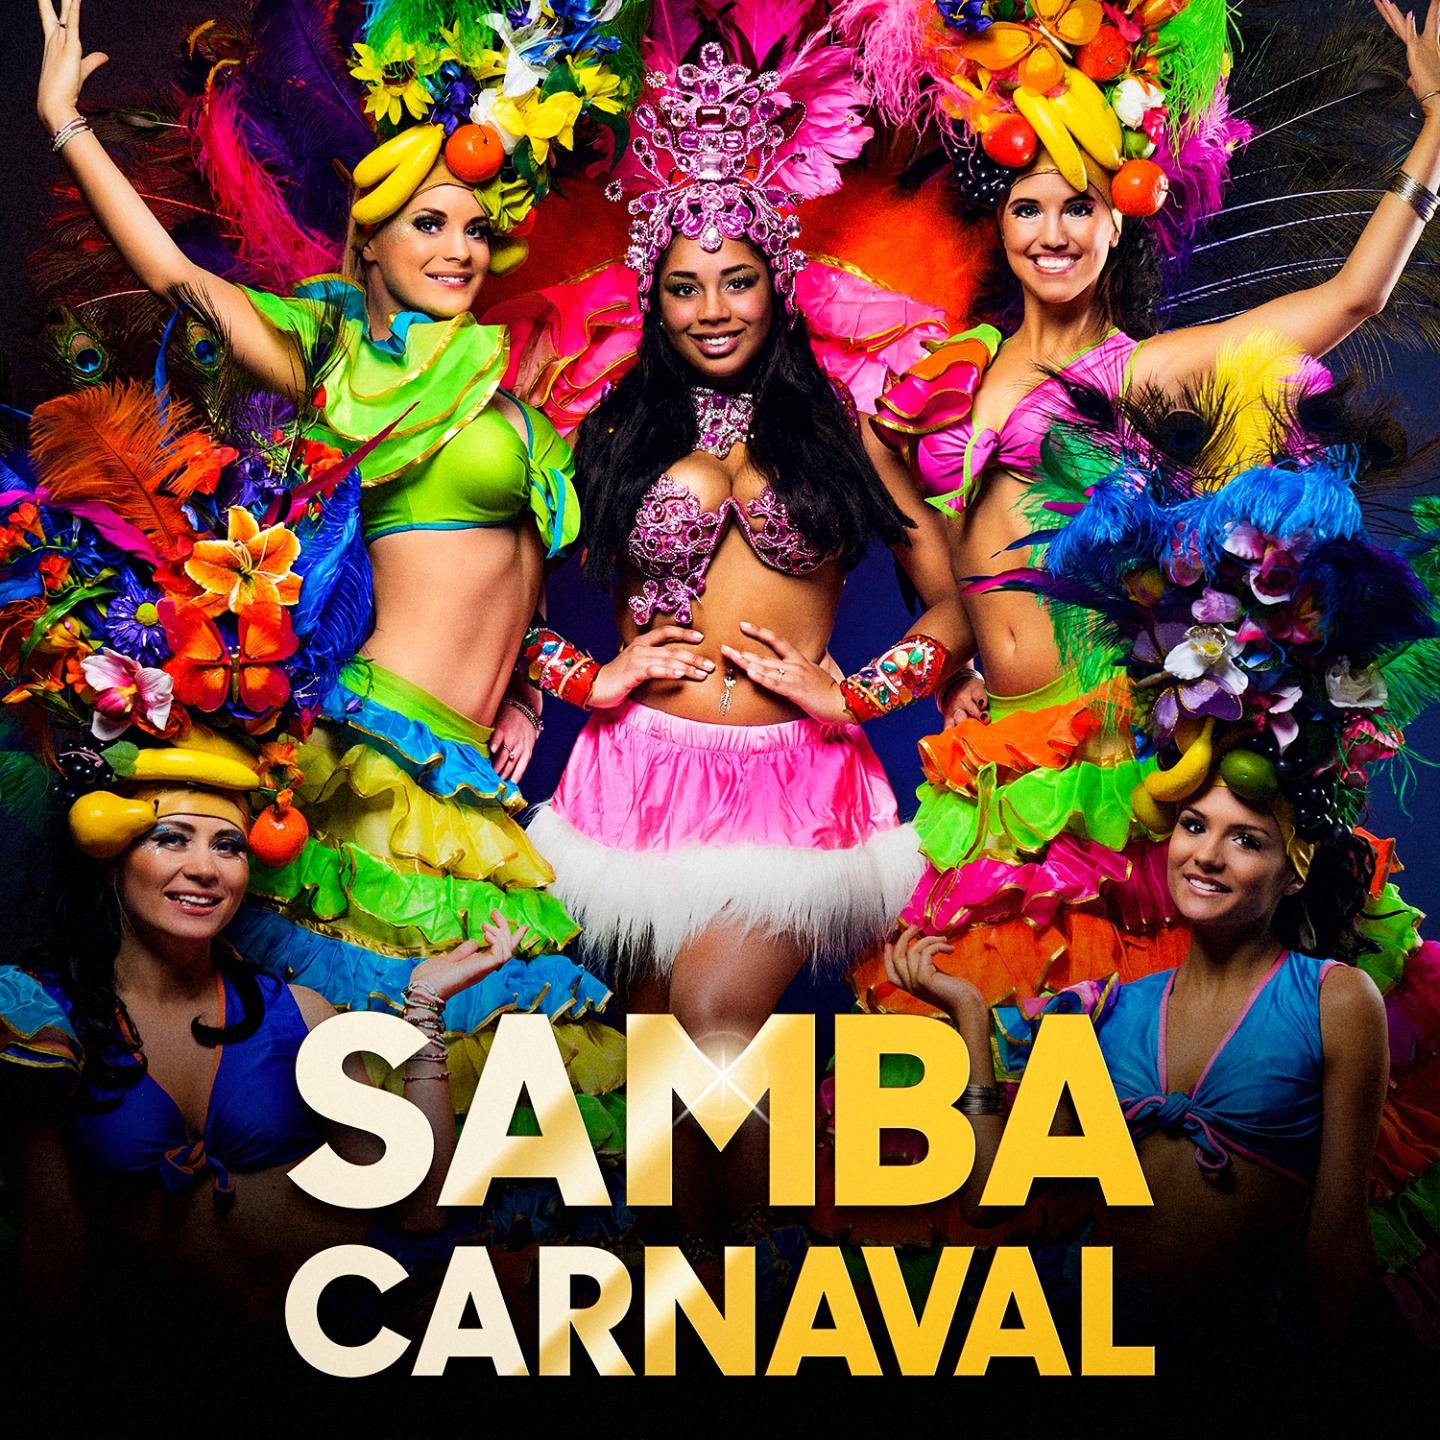 Brazilia Carnaval